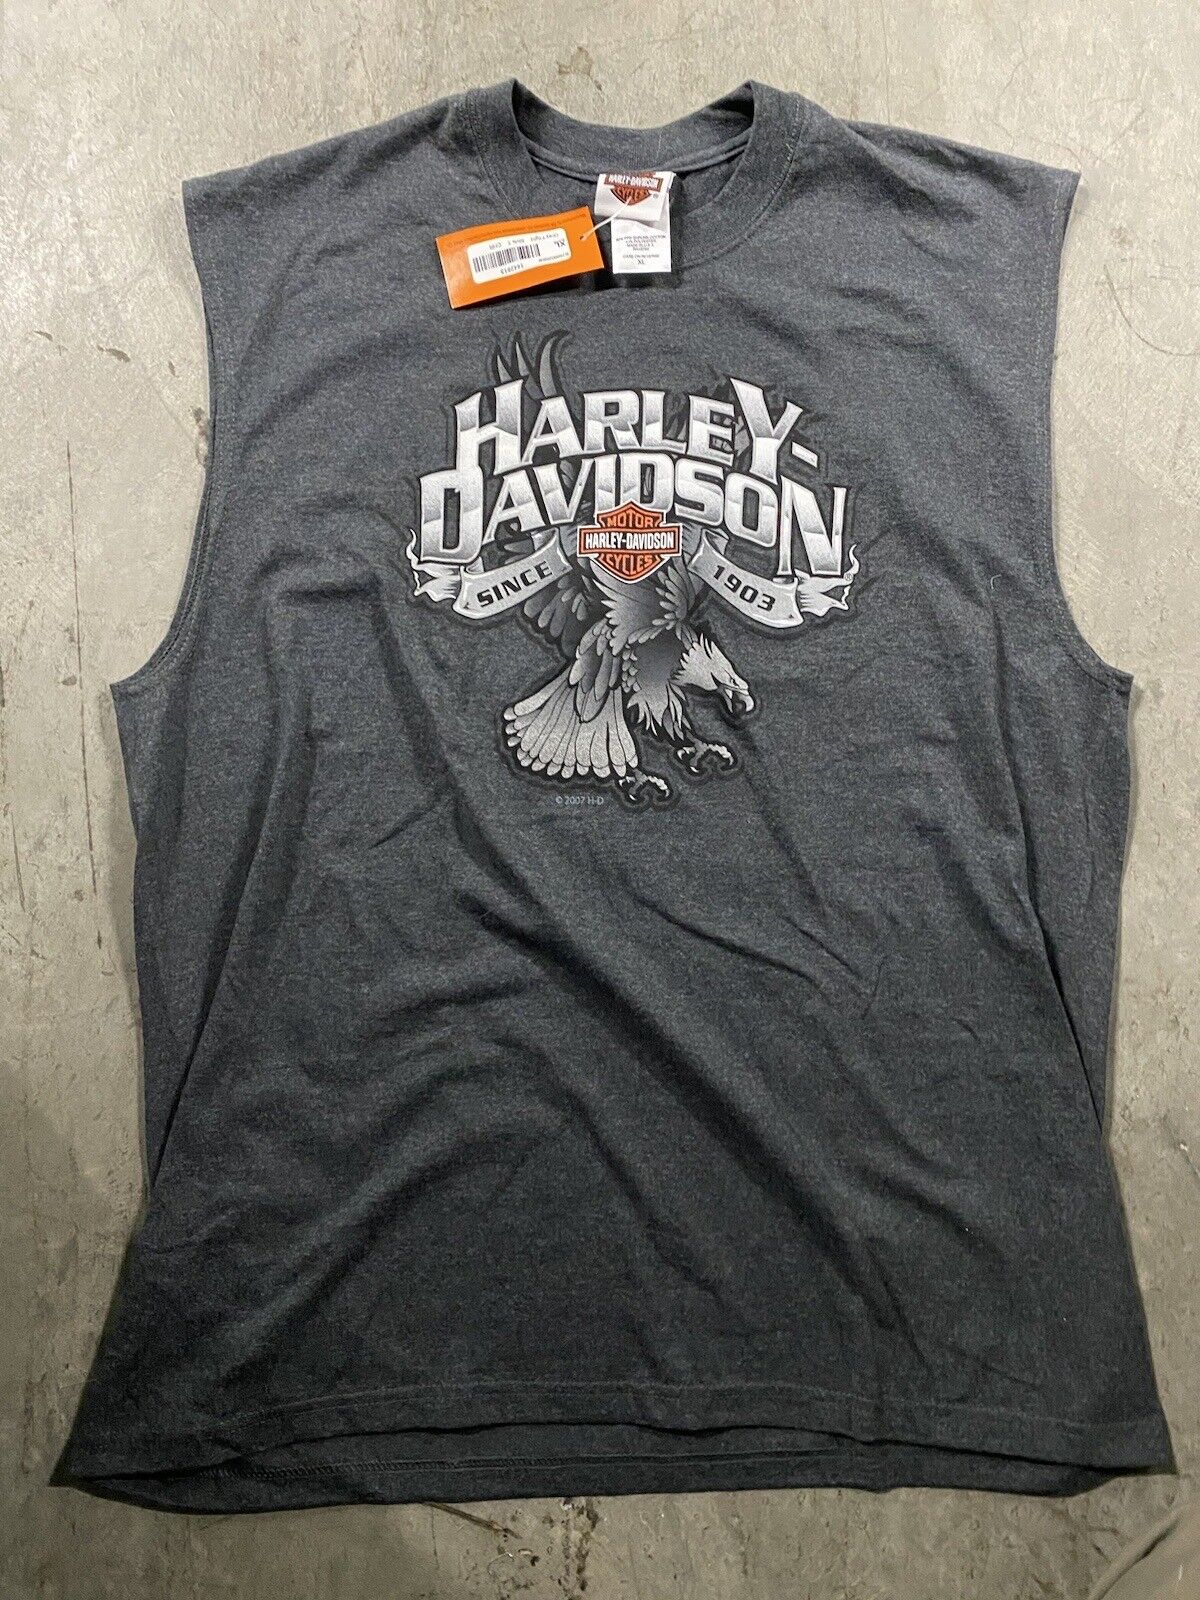 Vintage 2009 Harley Davidson Sleeveless Shirt XL NEW W/tags Gray 2 Sided